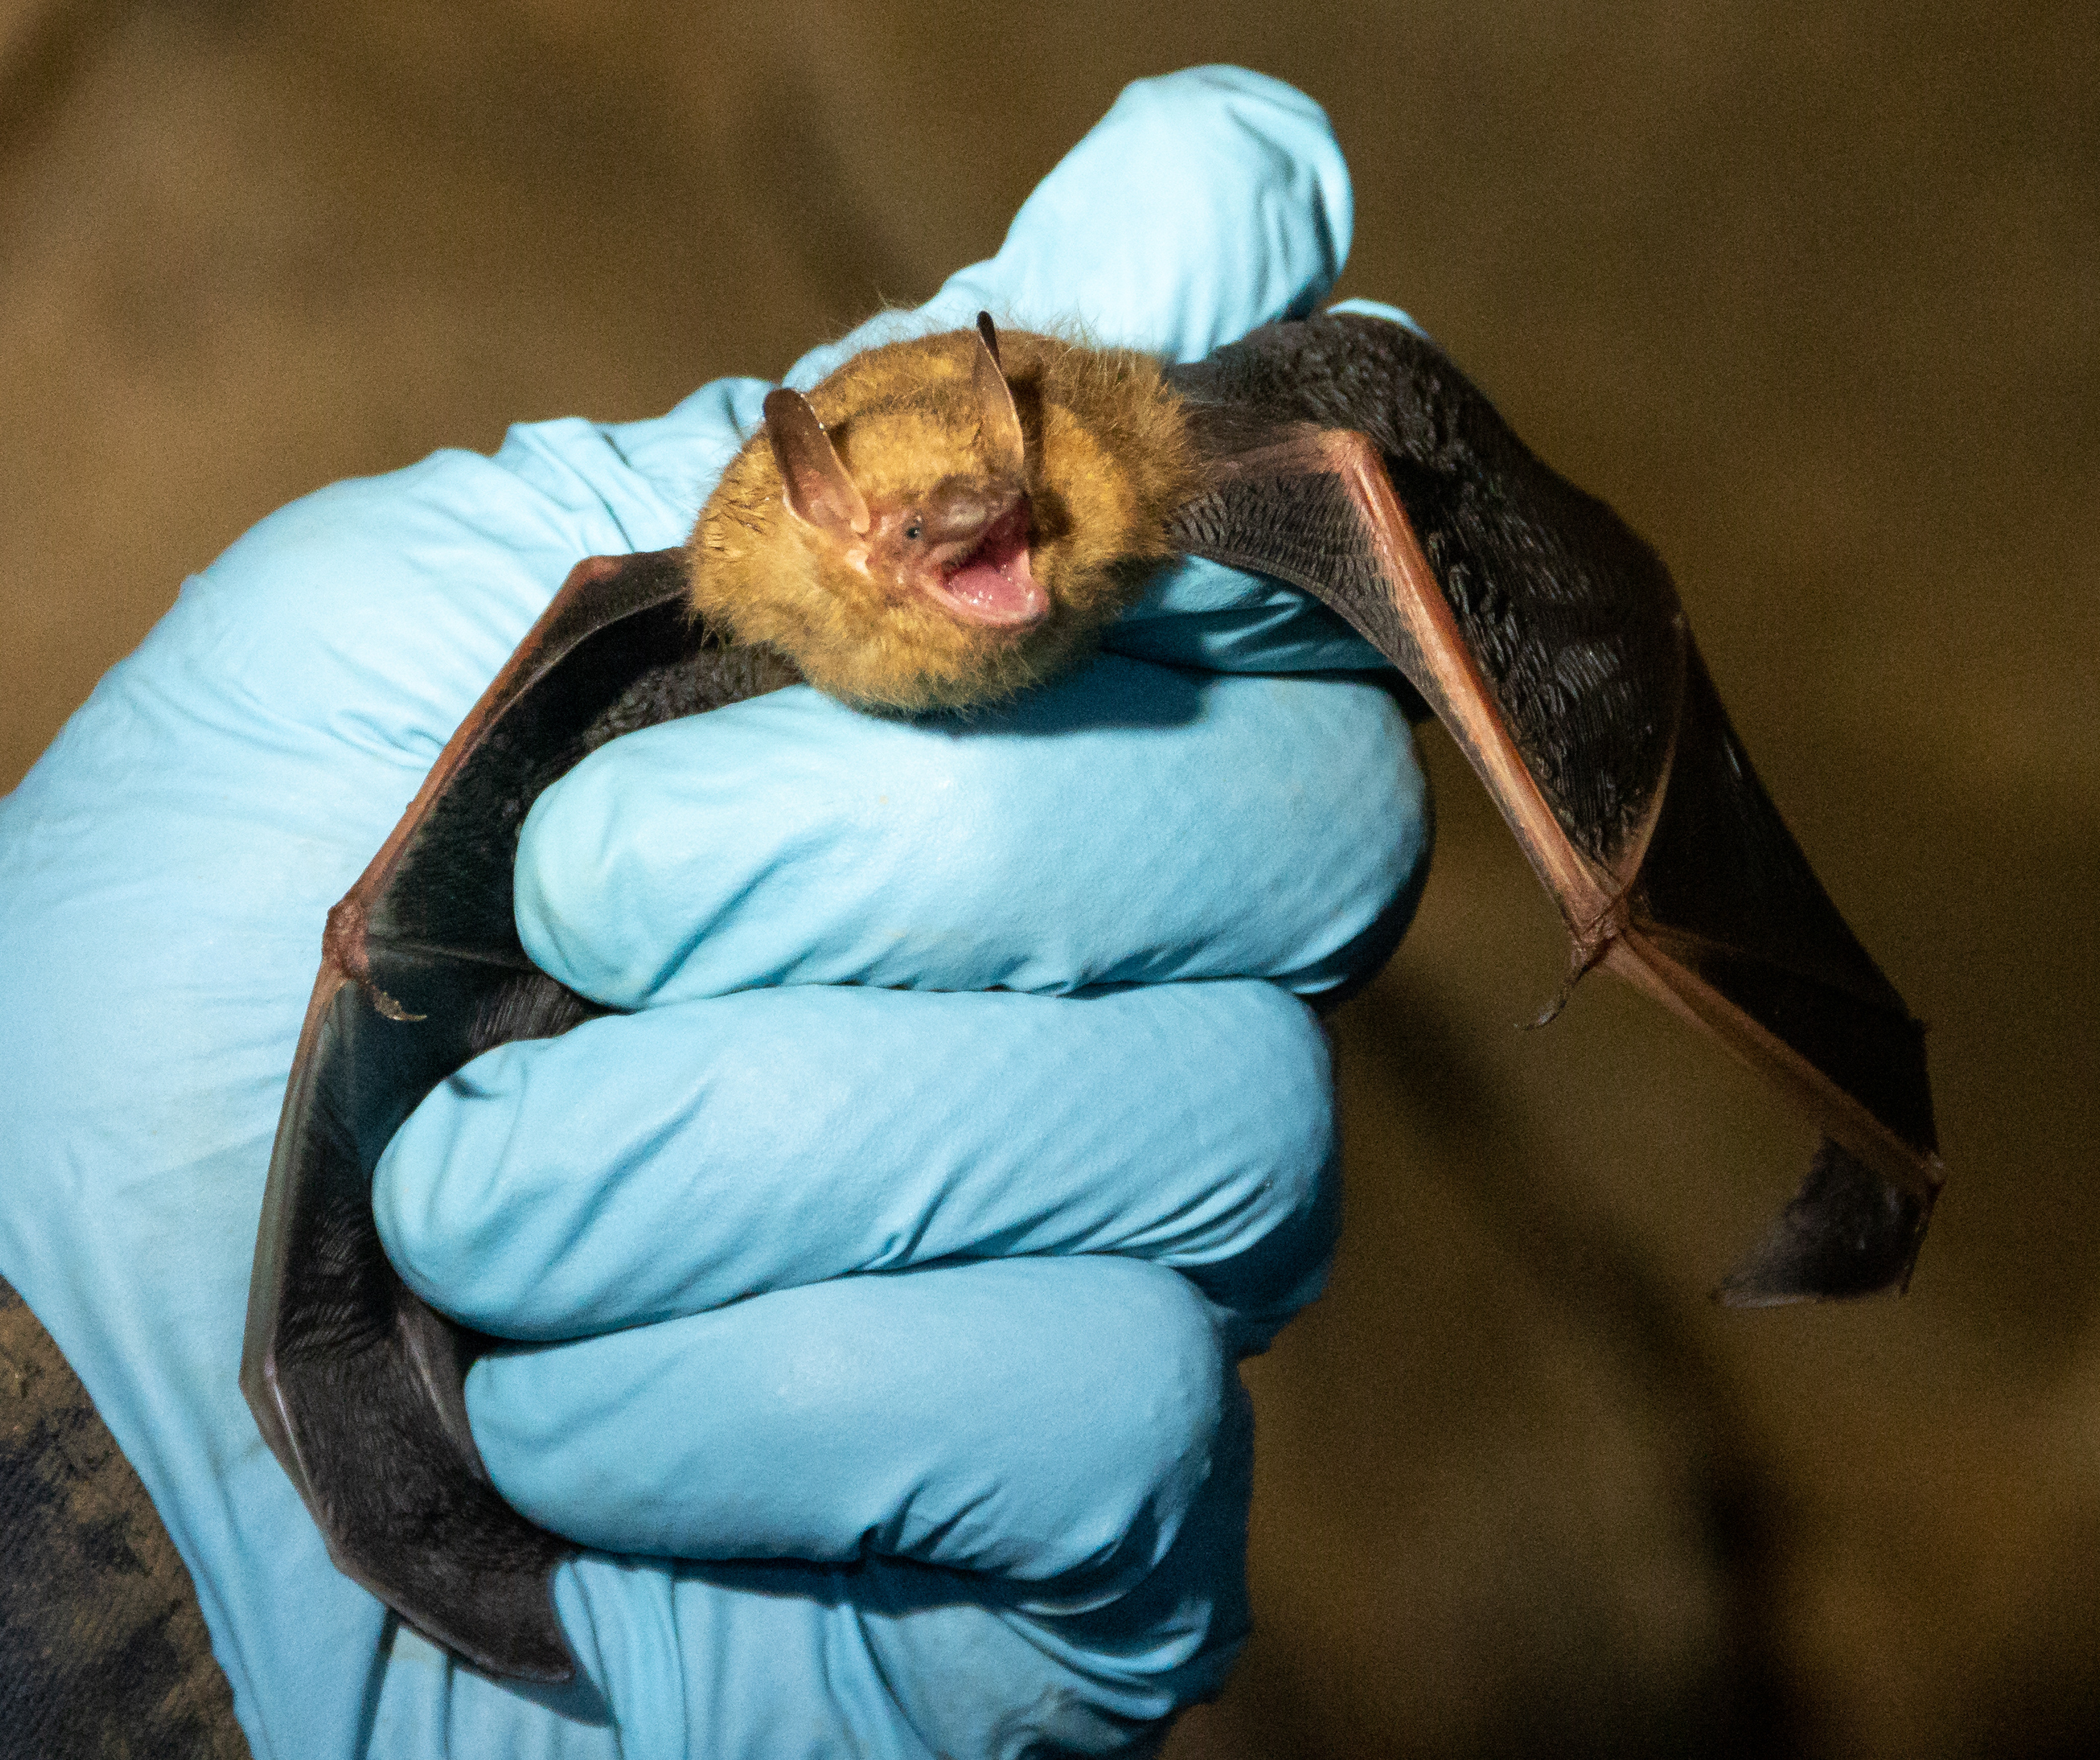 Bats come alive as Aces split doubleheader at Bradley - University